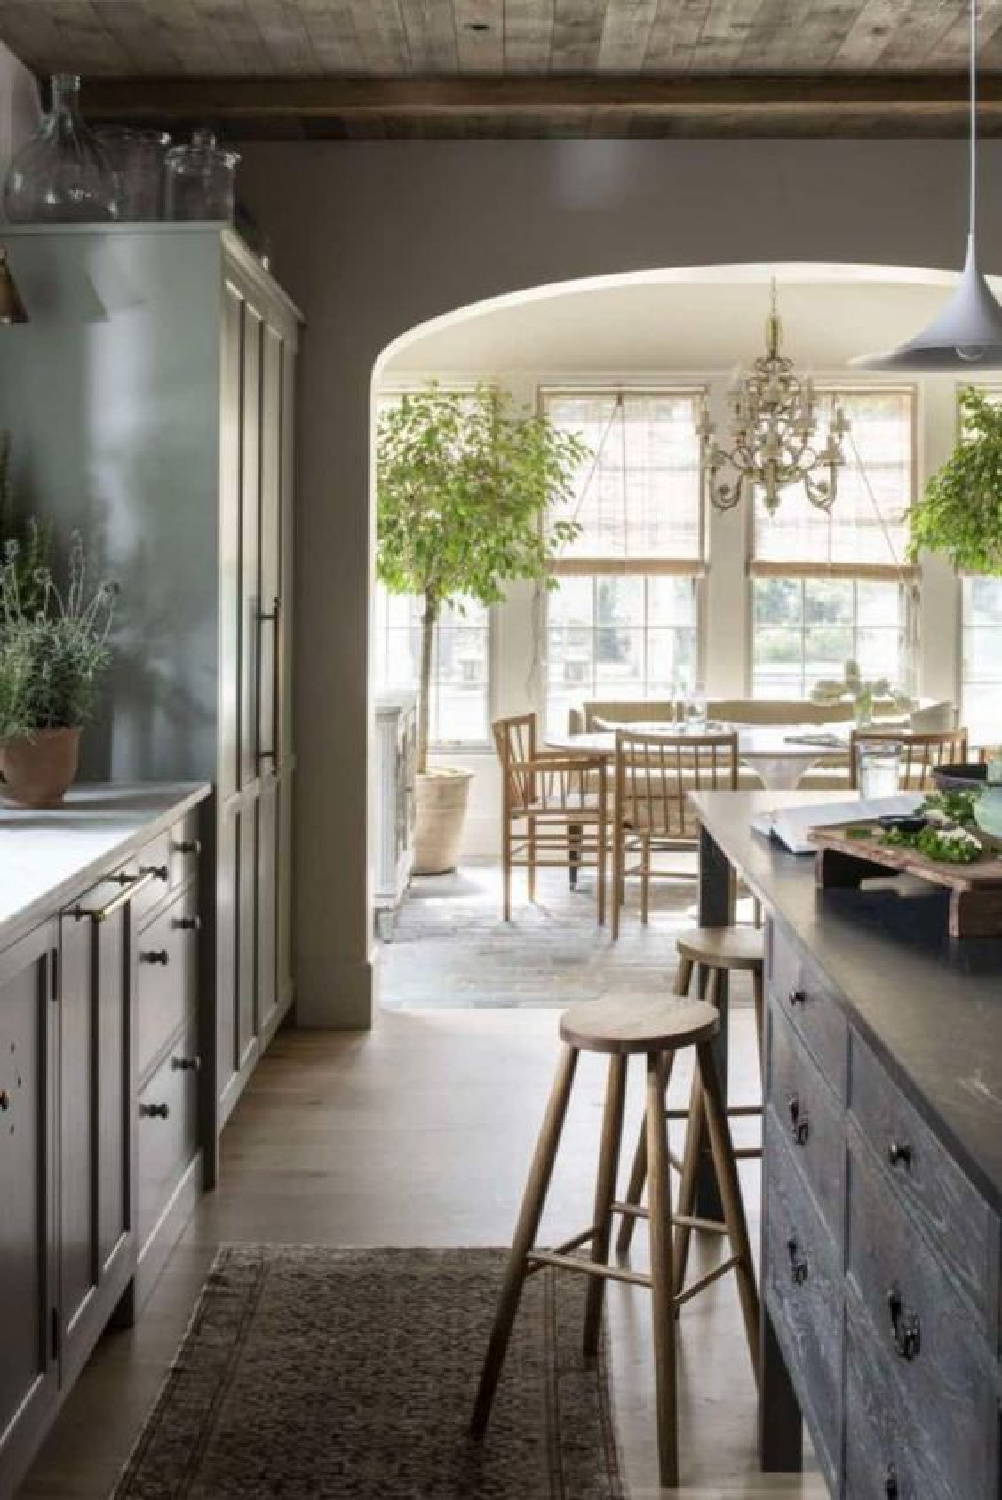 Rehkamp Larson Architects designed cozy European cottage kitchen in a Minnesota home. #cozykitchens #europeancottage #cozyopulence